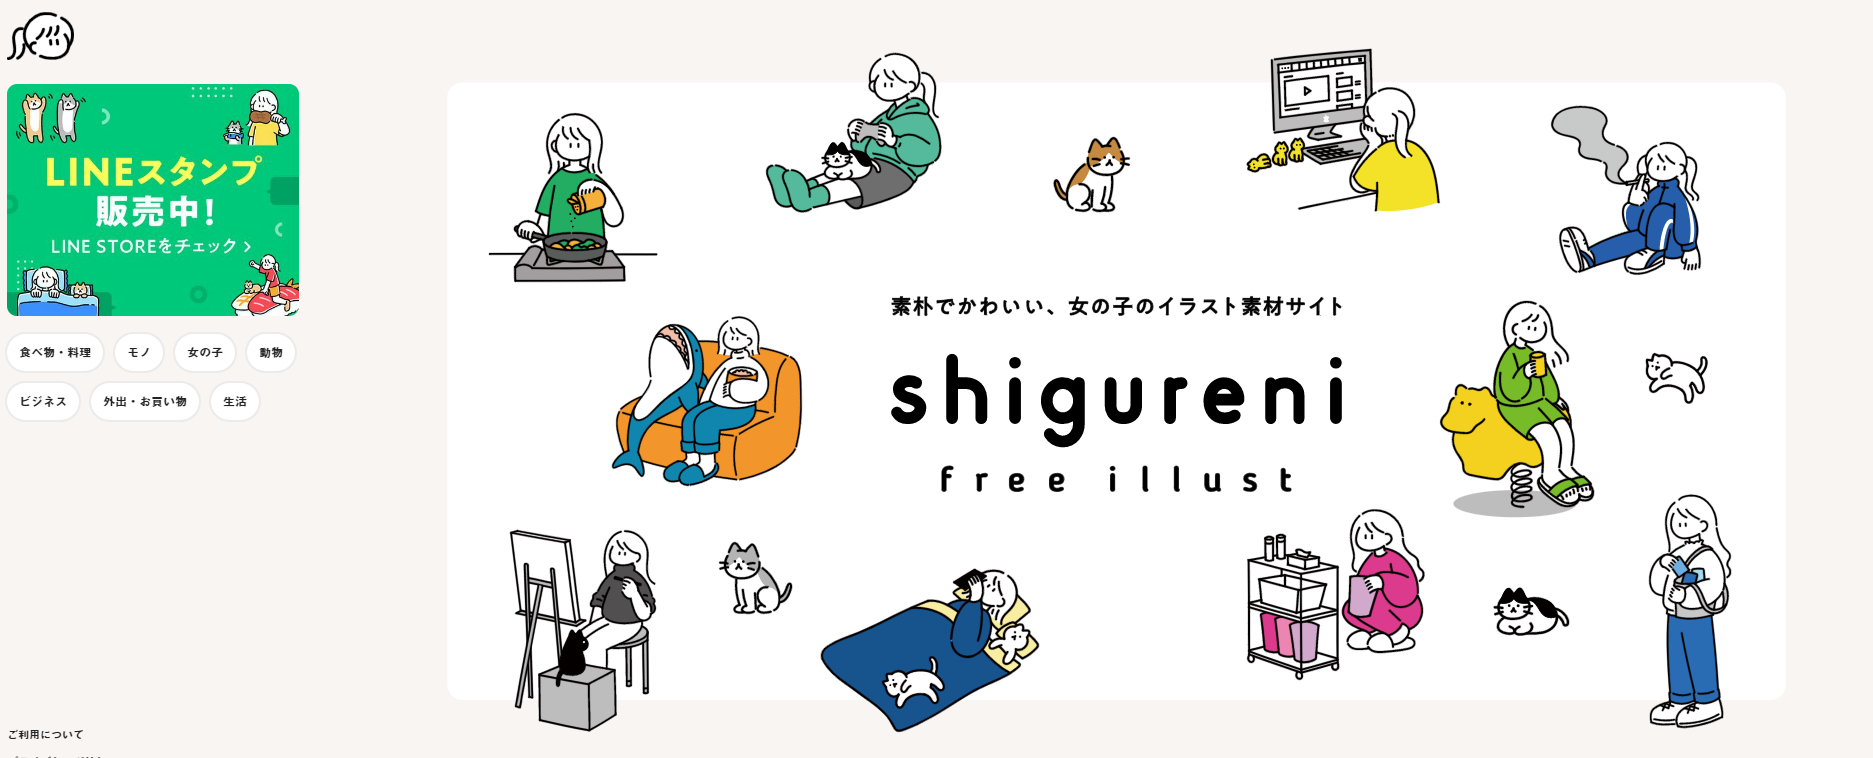 Shigureni free illust